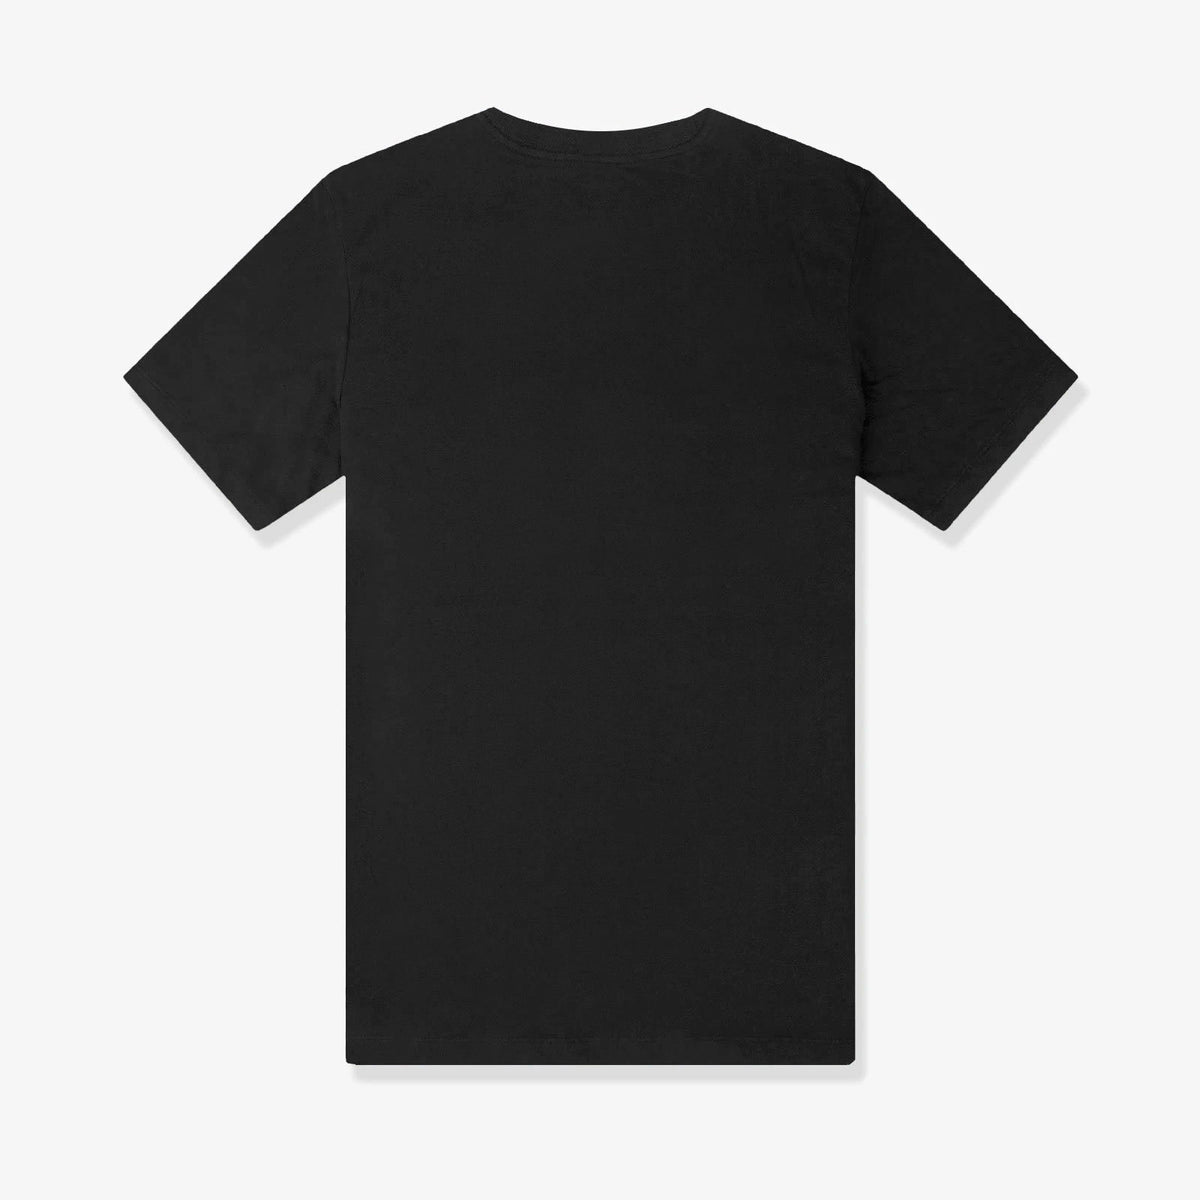 LeBron Father Time Dri-FIT T-Shirt - Black